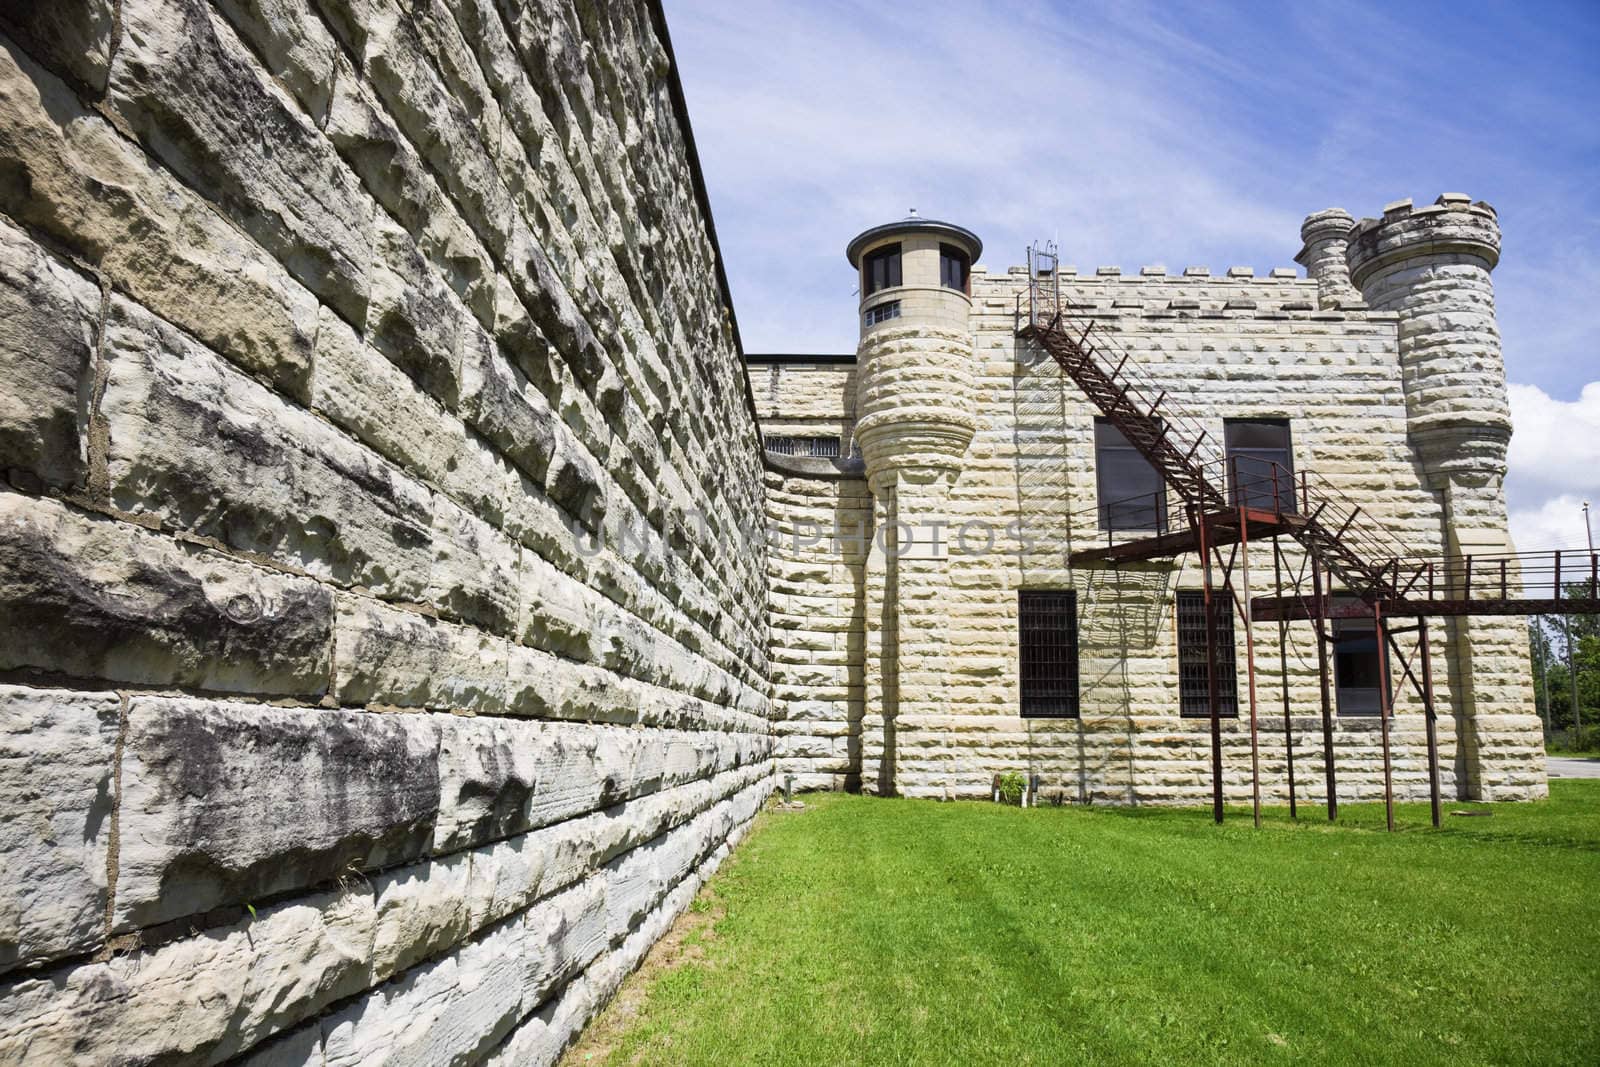 Walls of historic Jail in Joliet, Illinois - suburb of Chicago.